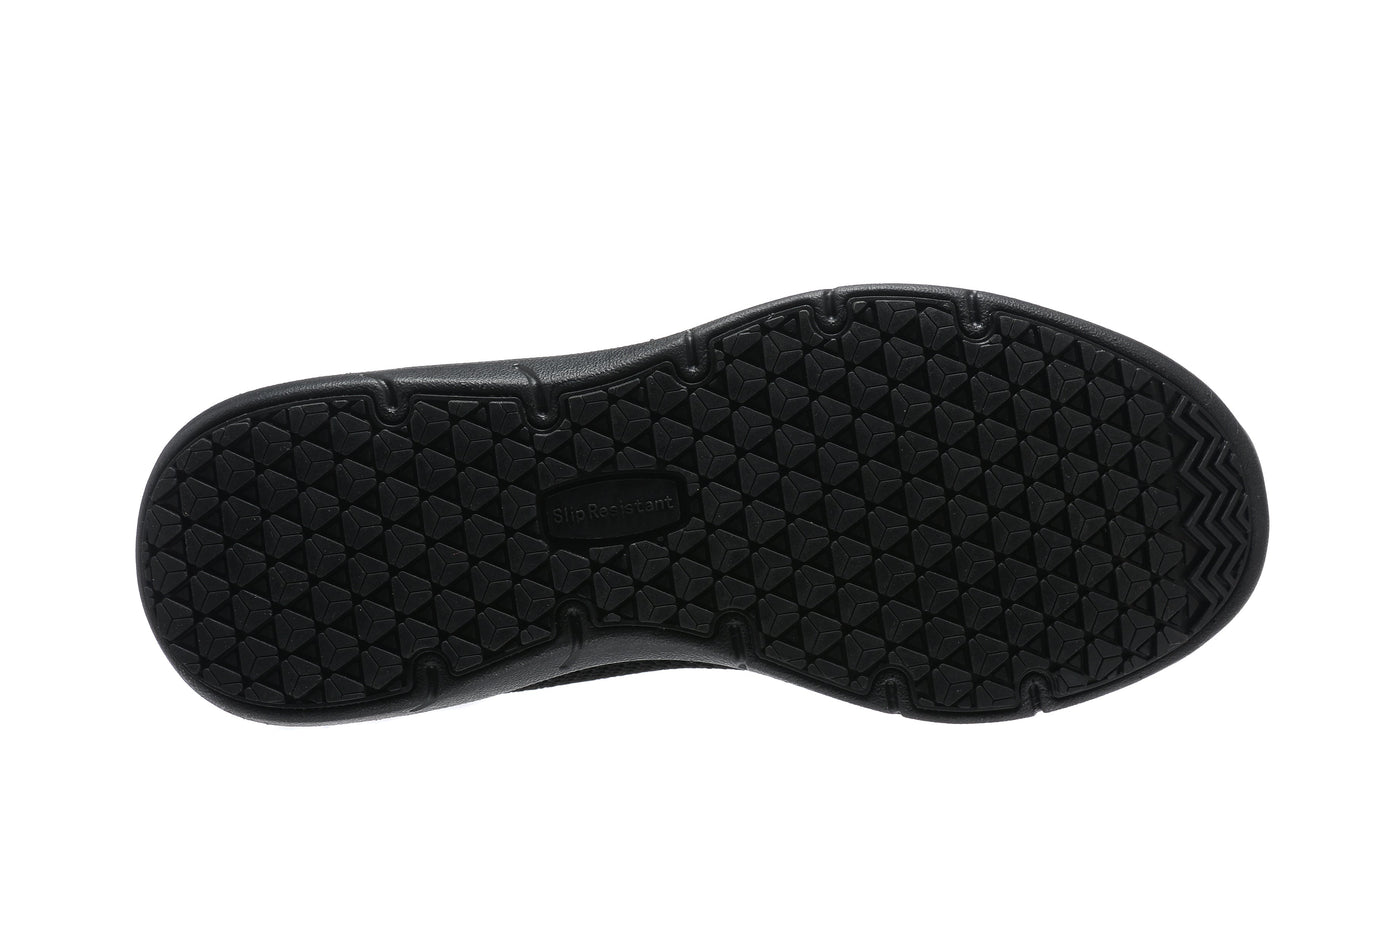 New Men's Light Weight Non-Slip Work Sneaker - Shop Genuine Leather men & women's boots online | AdTecFootWear